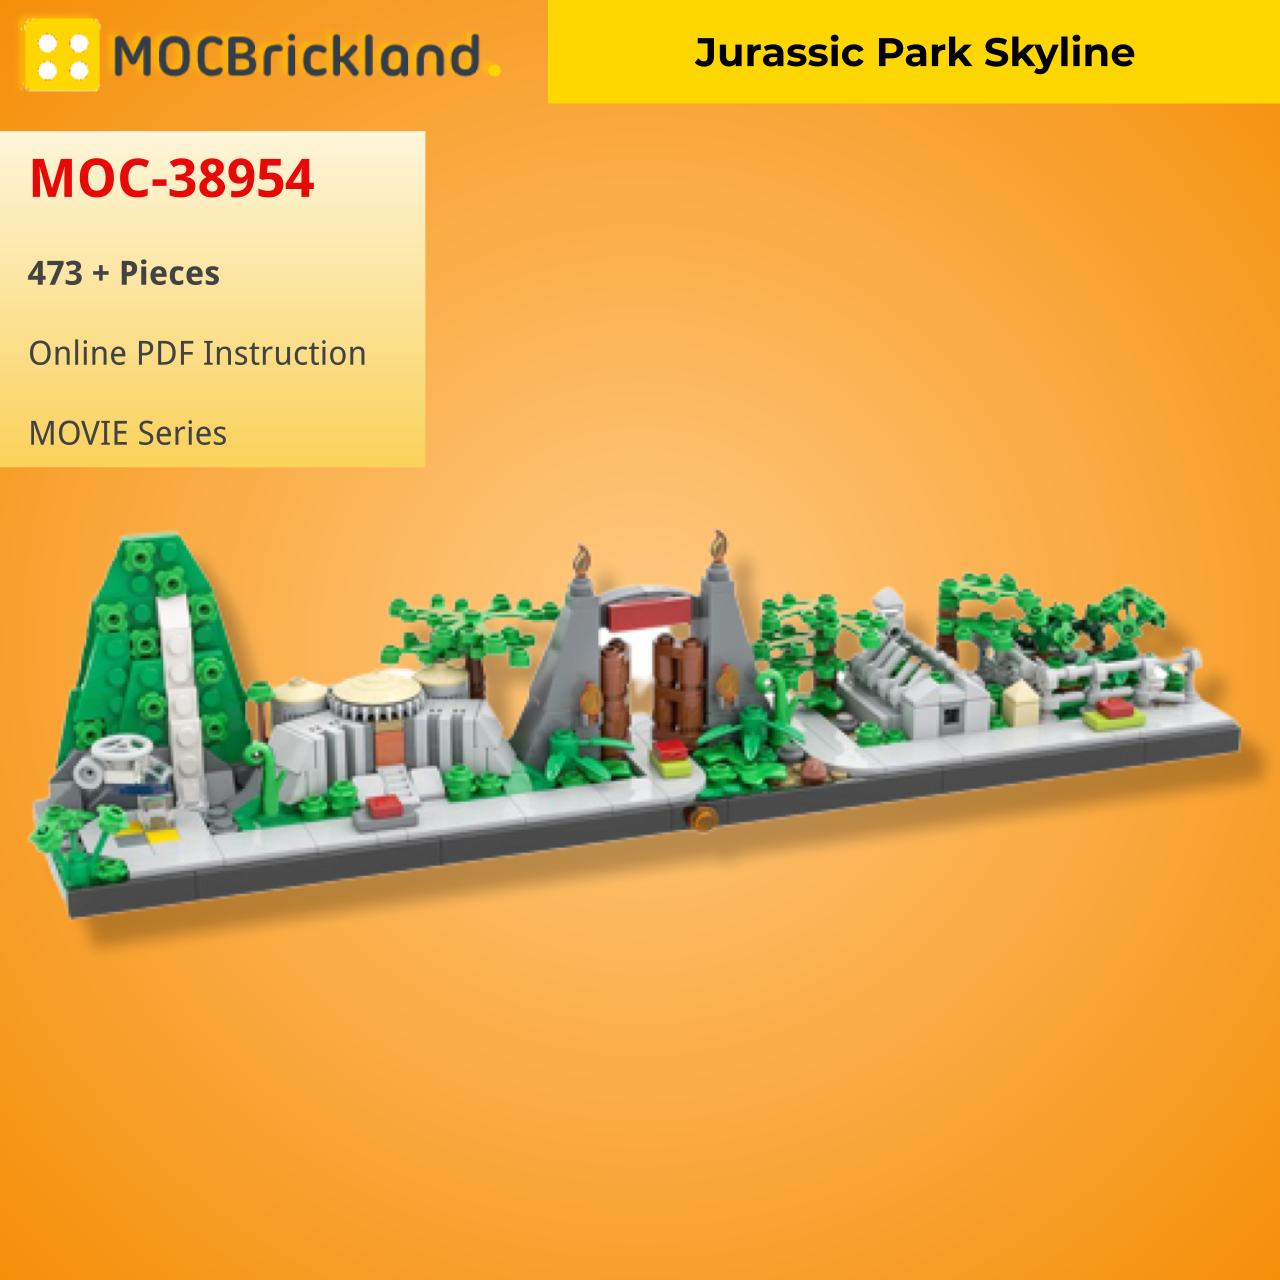 MOCBRICKLAND MOC-38954 Jurassic Park Skyline